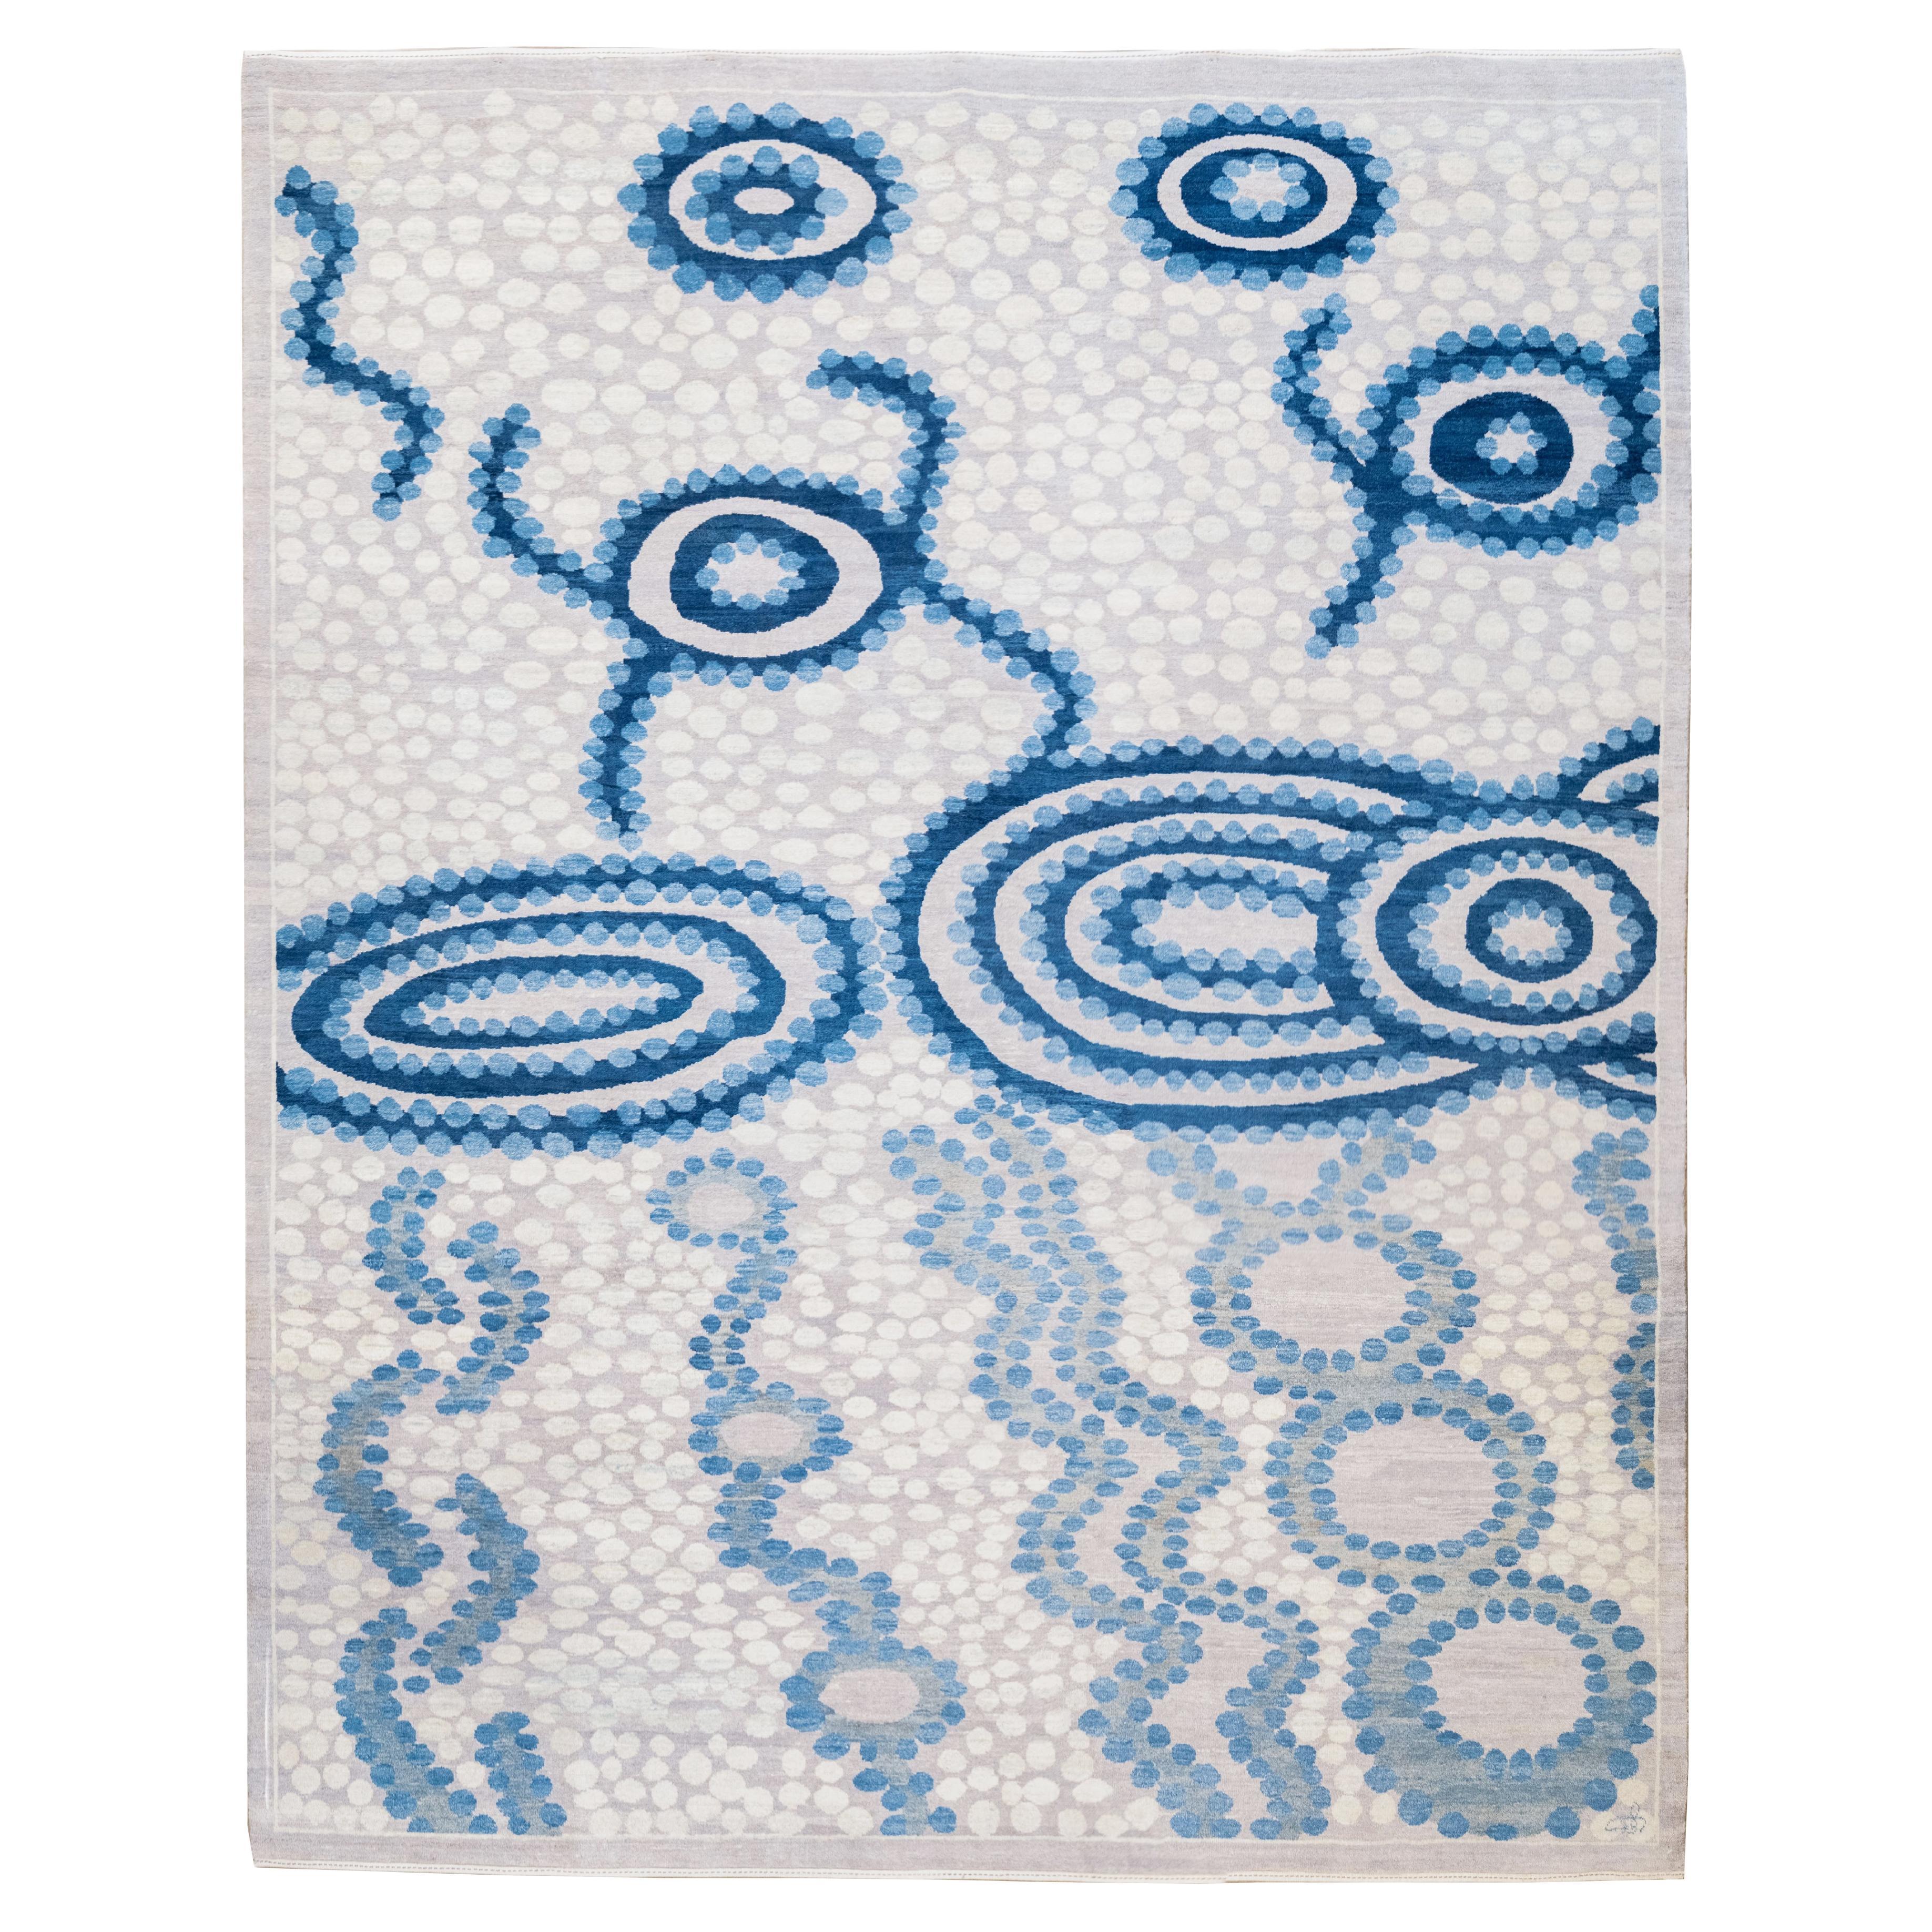 Blaue und cremefarbene Wolle Contemporary Persian Carpet, handgeknüpft, 8' x 10'